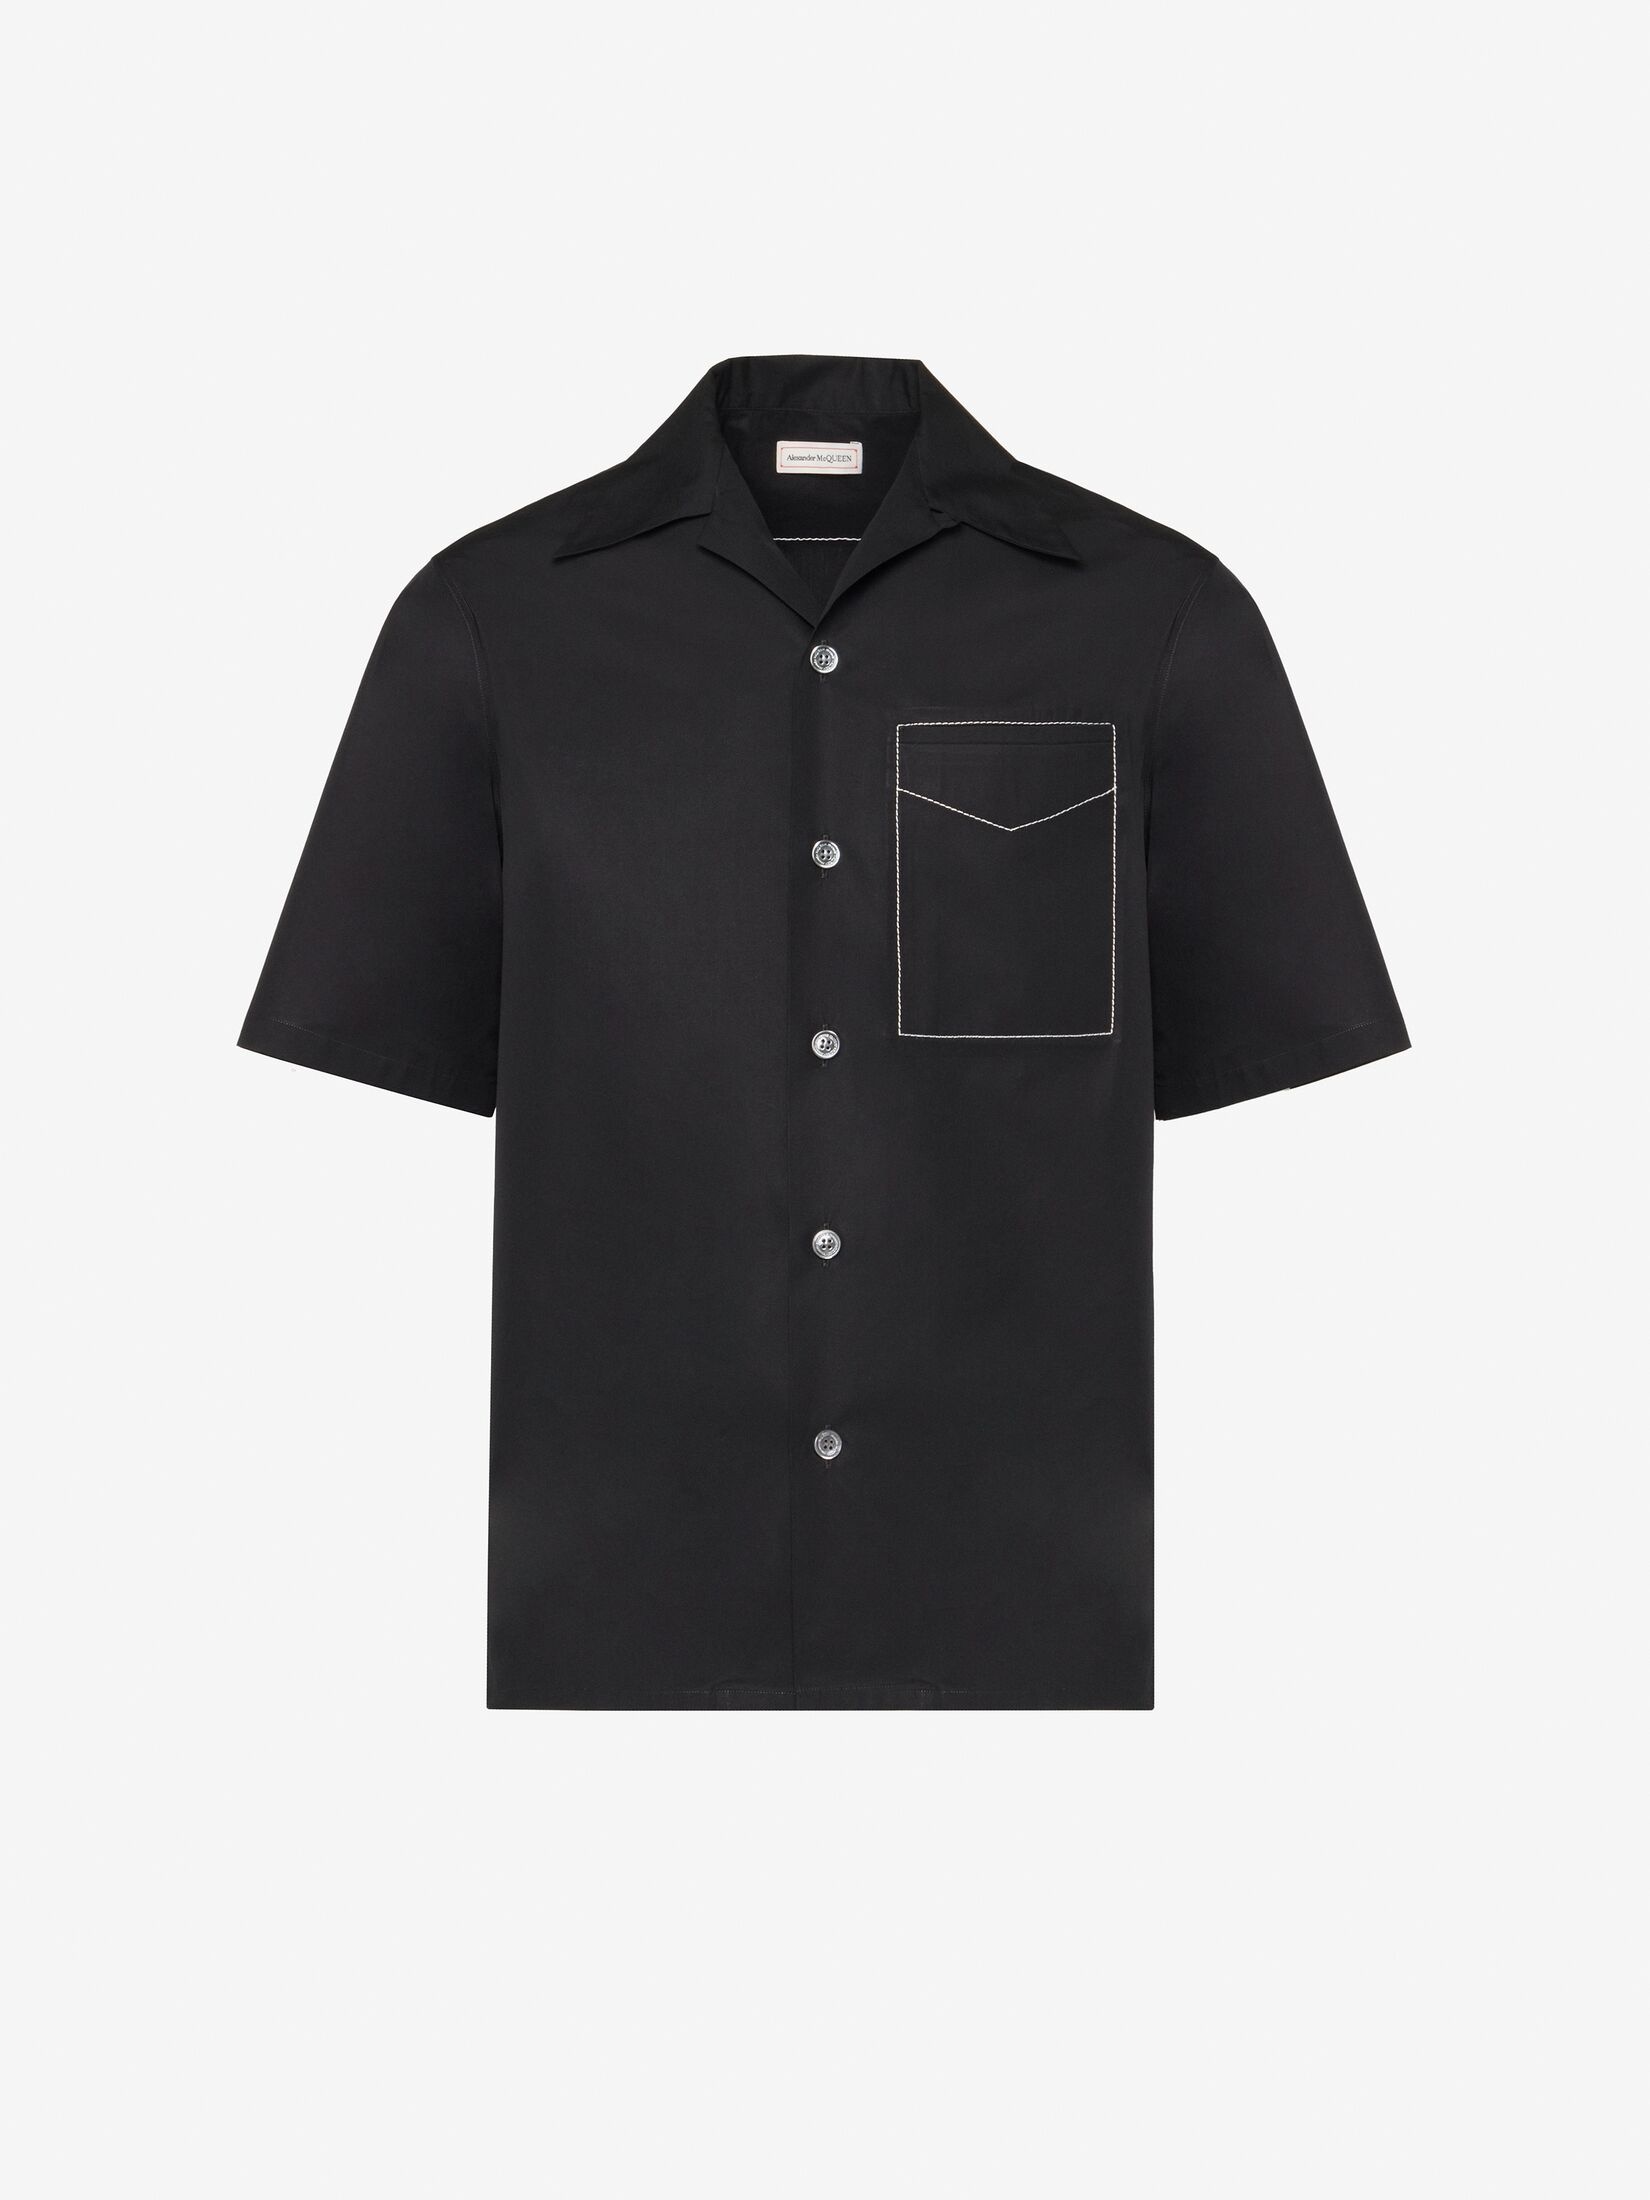 Men's Contrast Stitch Hawaiian Shirt in Black - 1